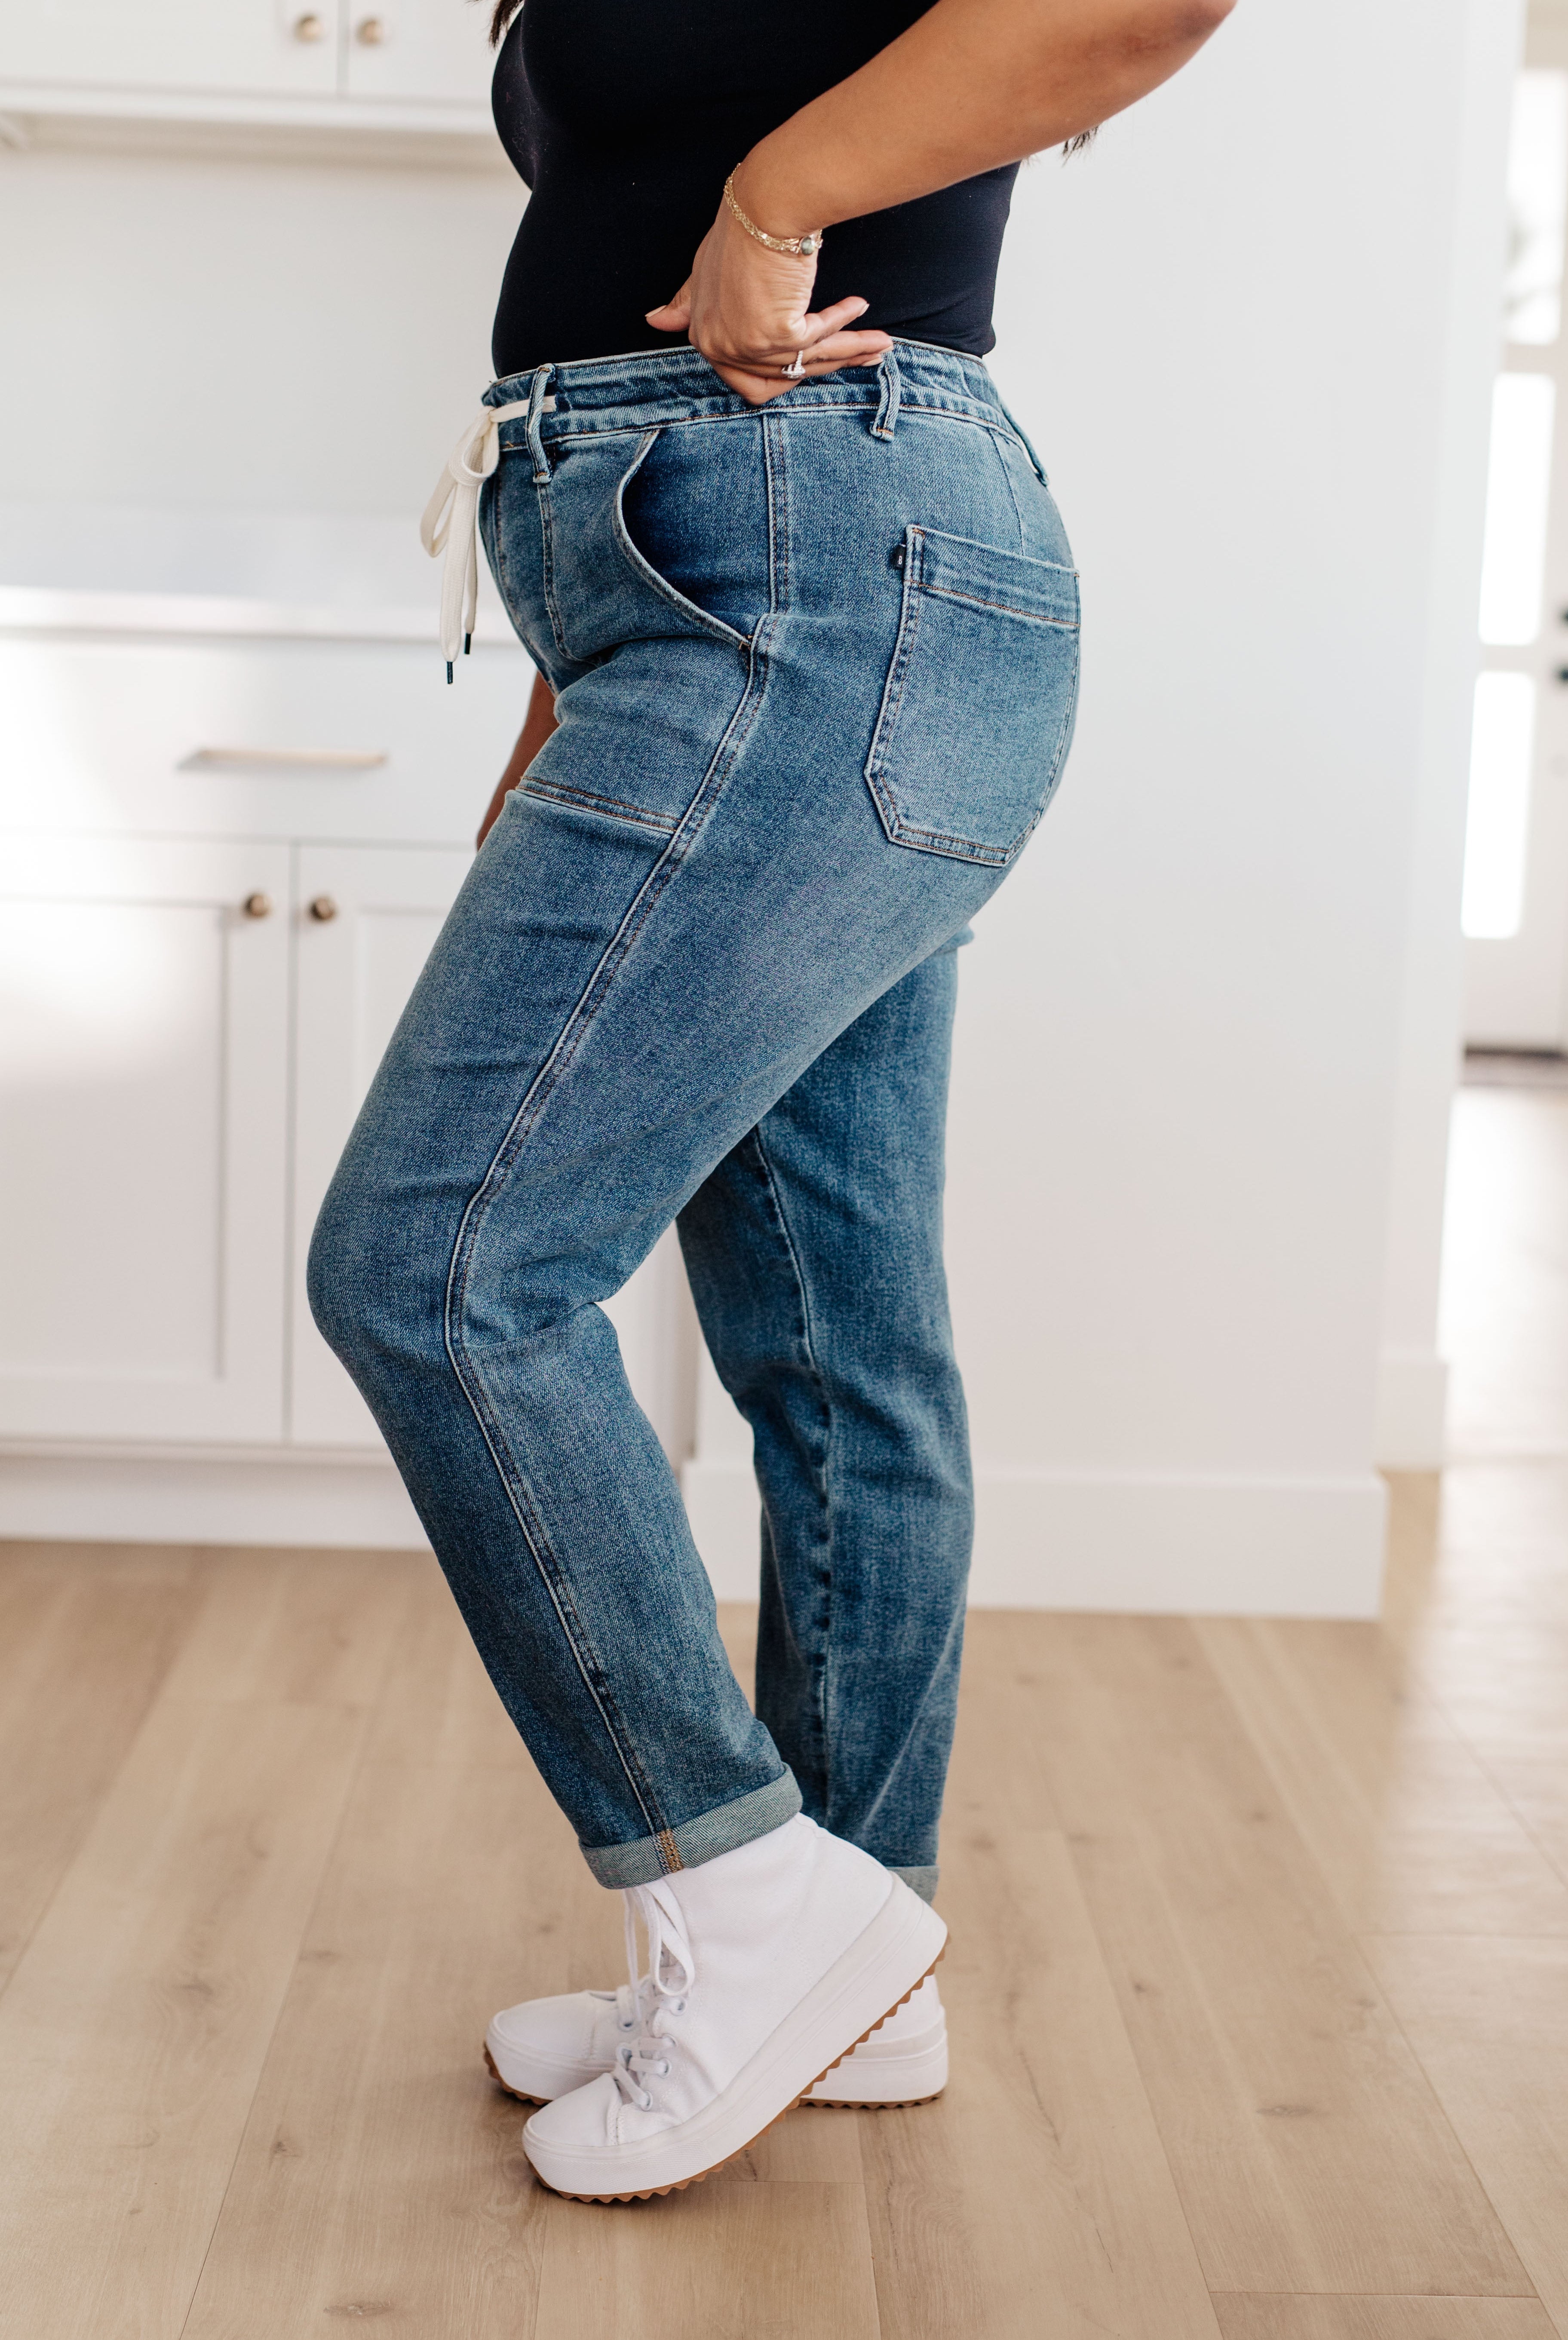 Payton Pull On Denim Joggers in Medium Wash-Jeans-Krush Kandy, Women's Online Fashion Boutique Located in Phoenix, Arizona (Scottsdale Area)